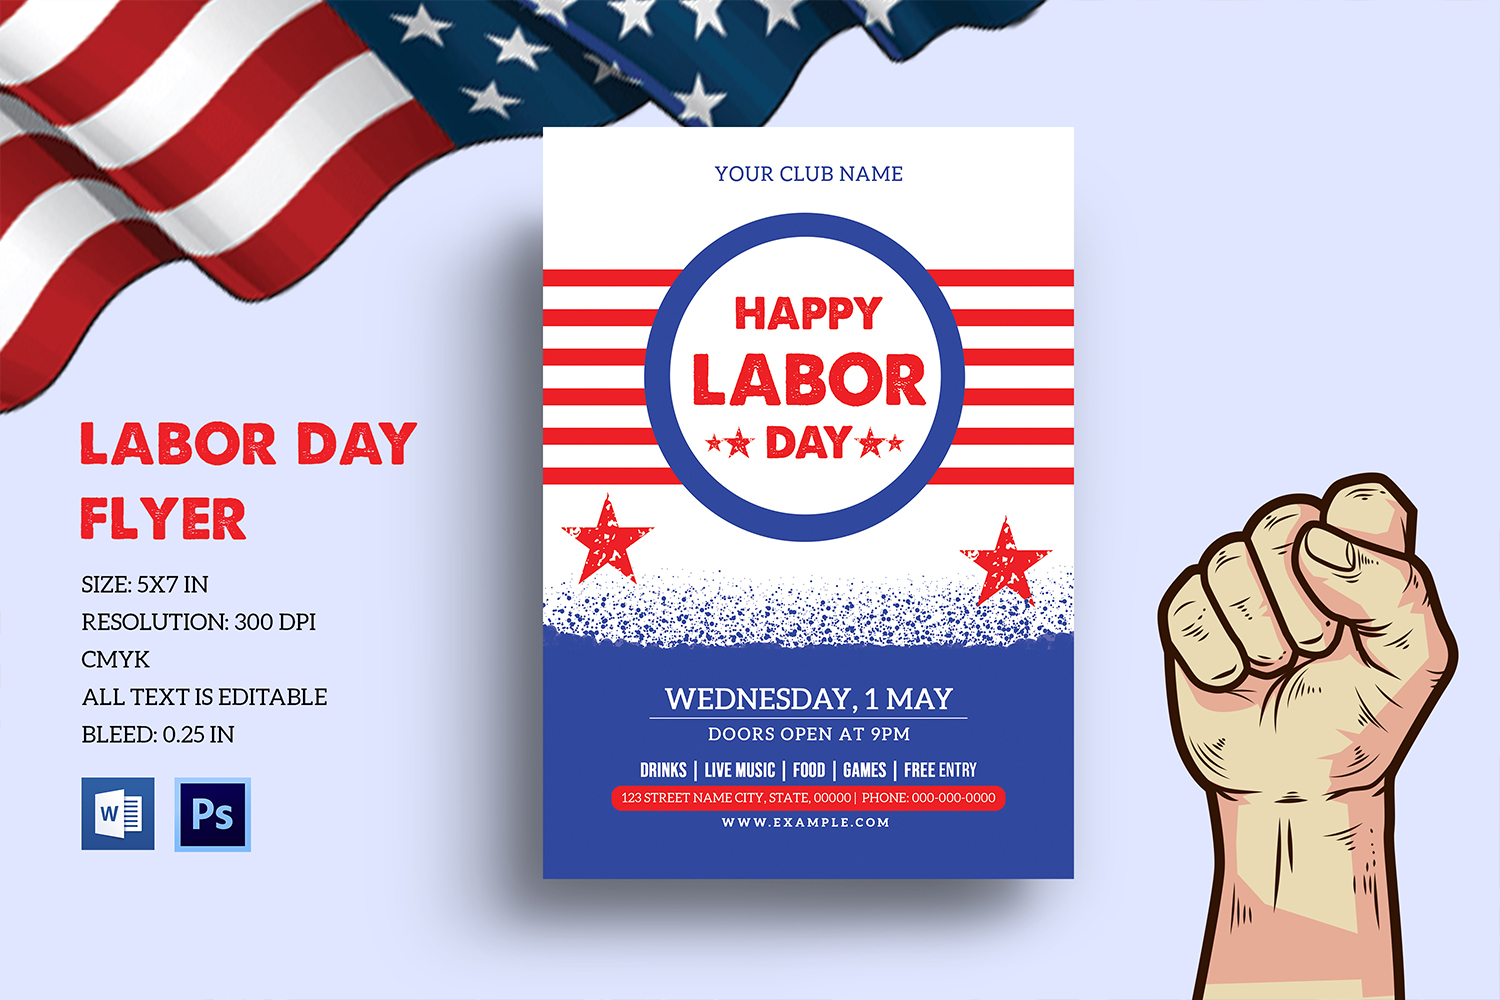 Labor Day Celebration Flyer Corporate Identity template